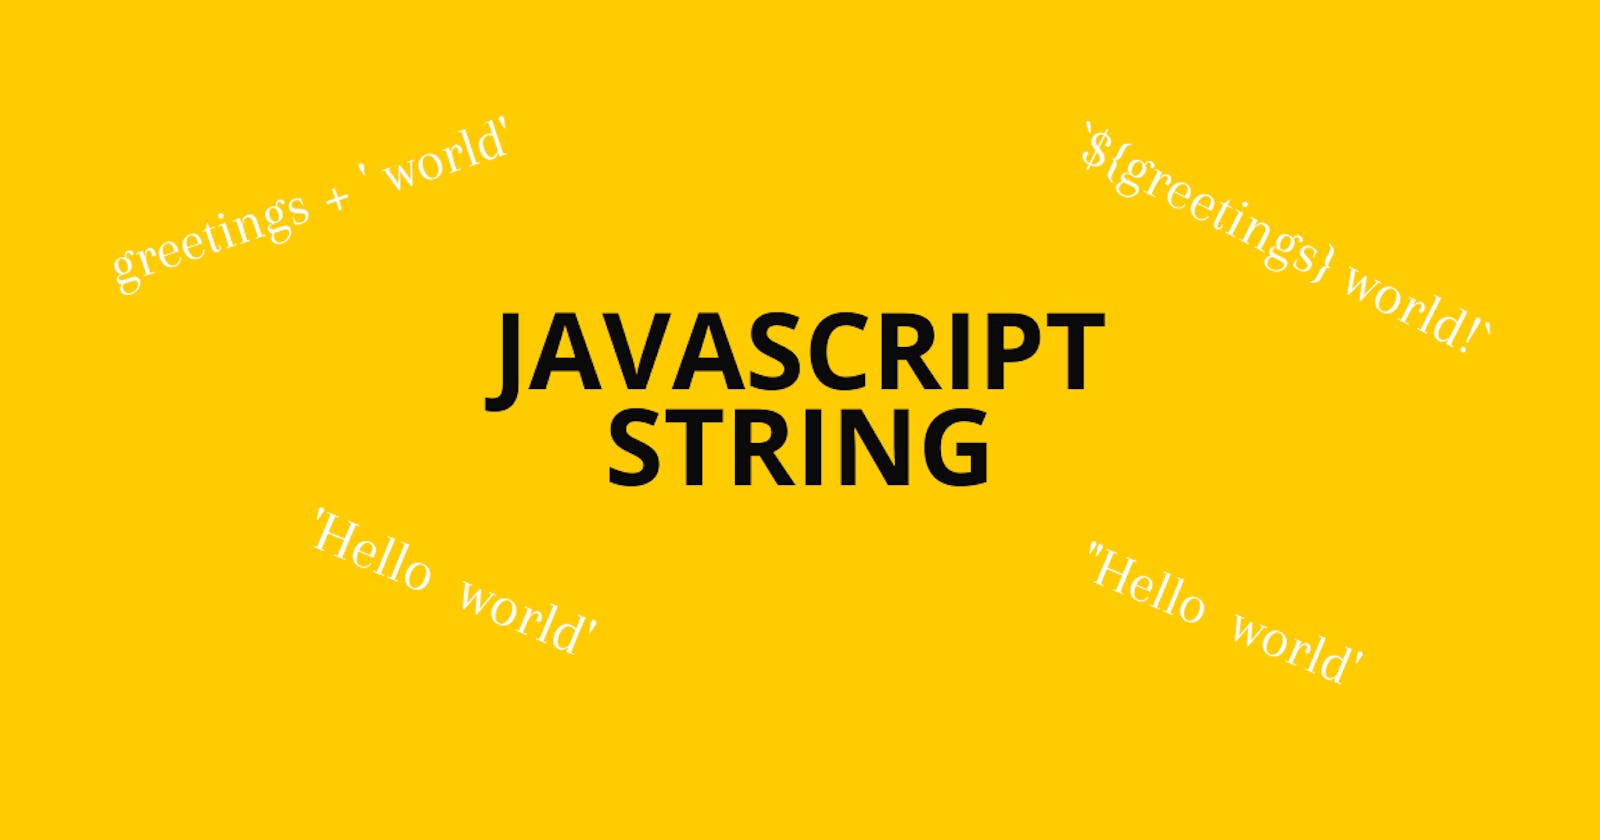 A Brief Look at JavaScript String